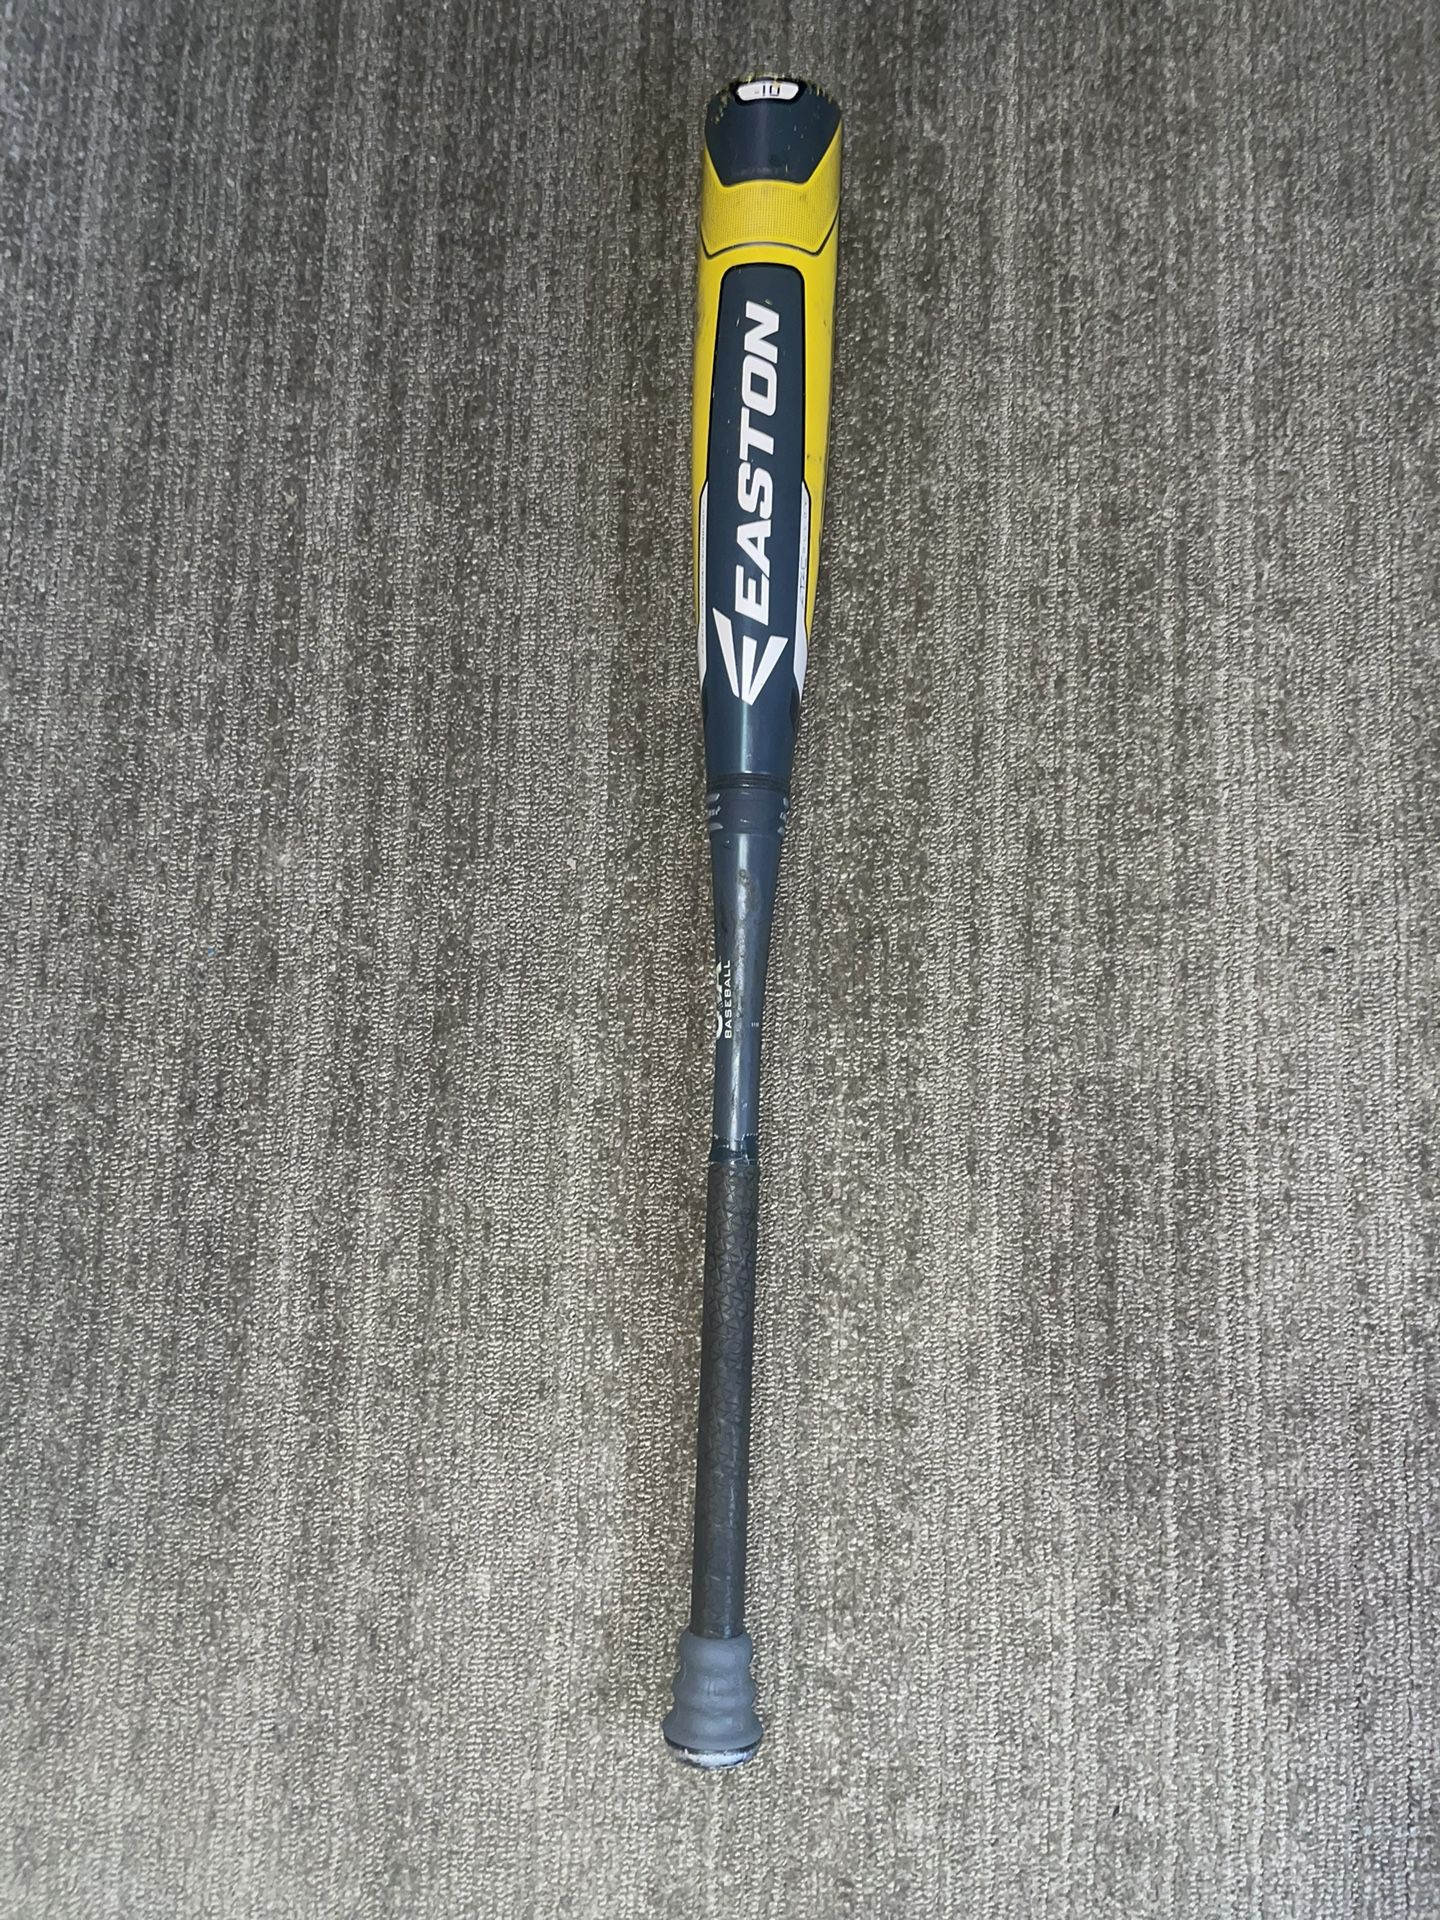 Easton Beast X Baseball Bat|30in -10